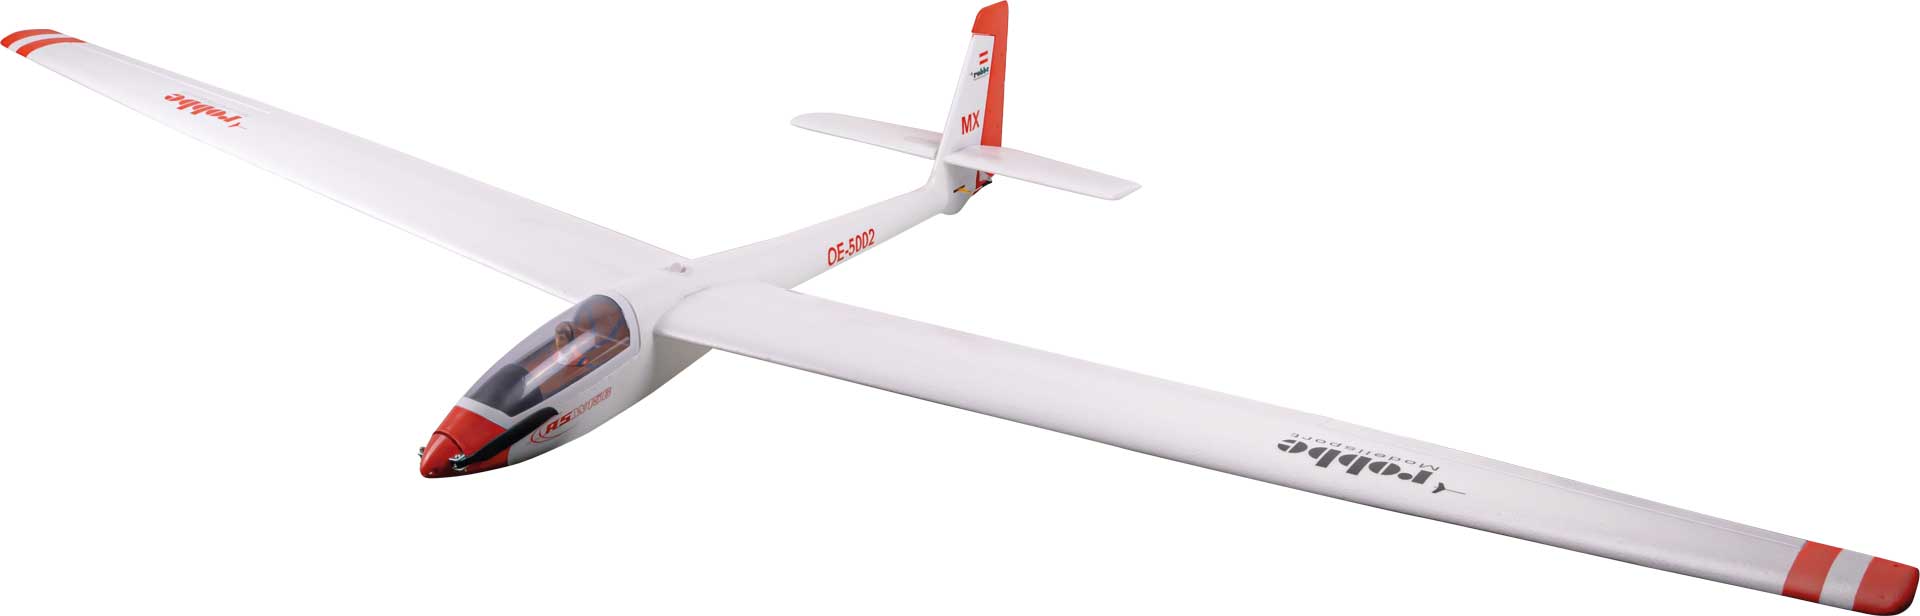 Robbe Modellsport ASW 15b KIT w/o electronic electric glider plane